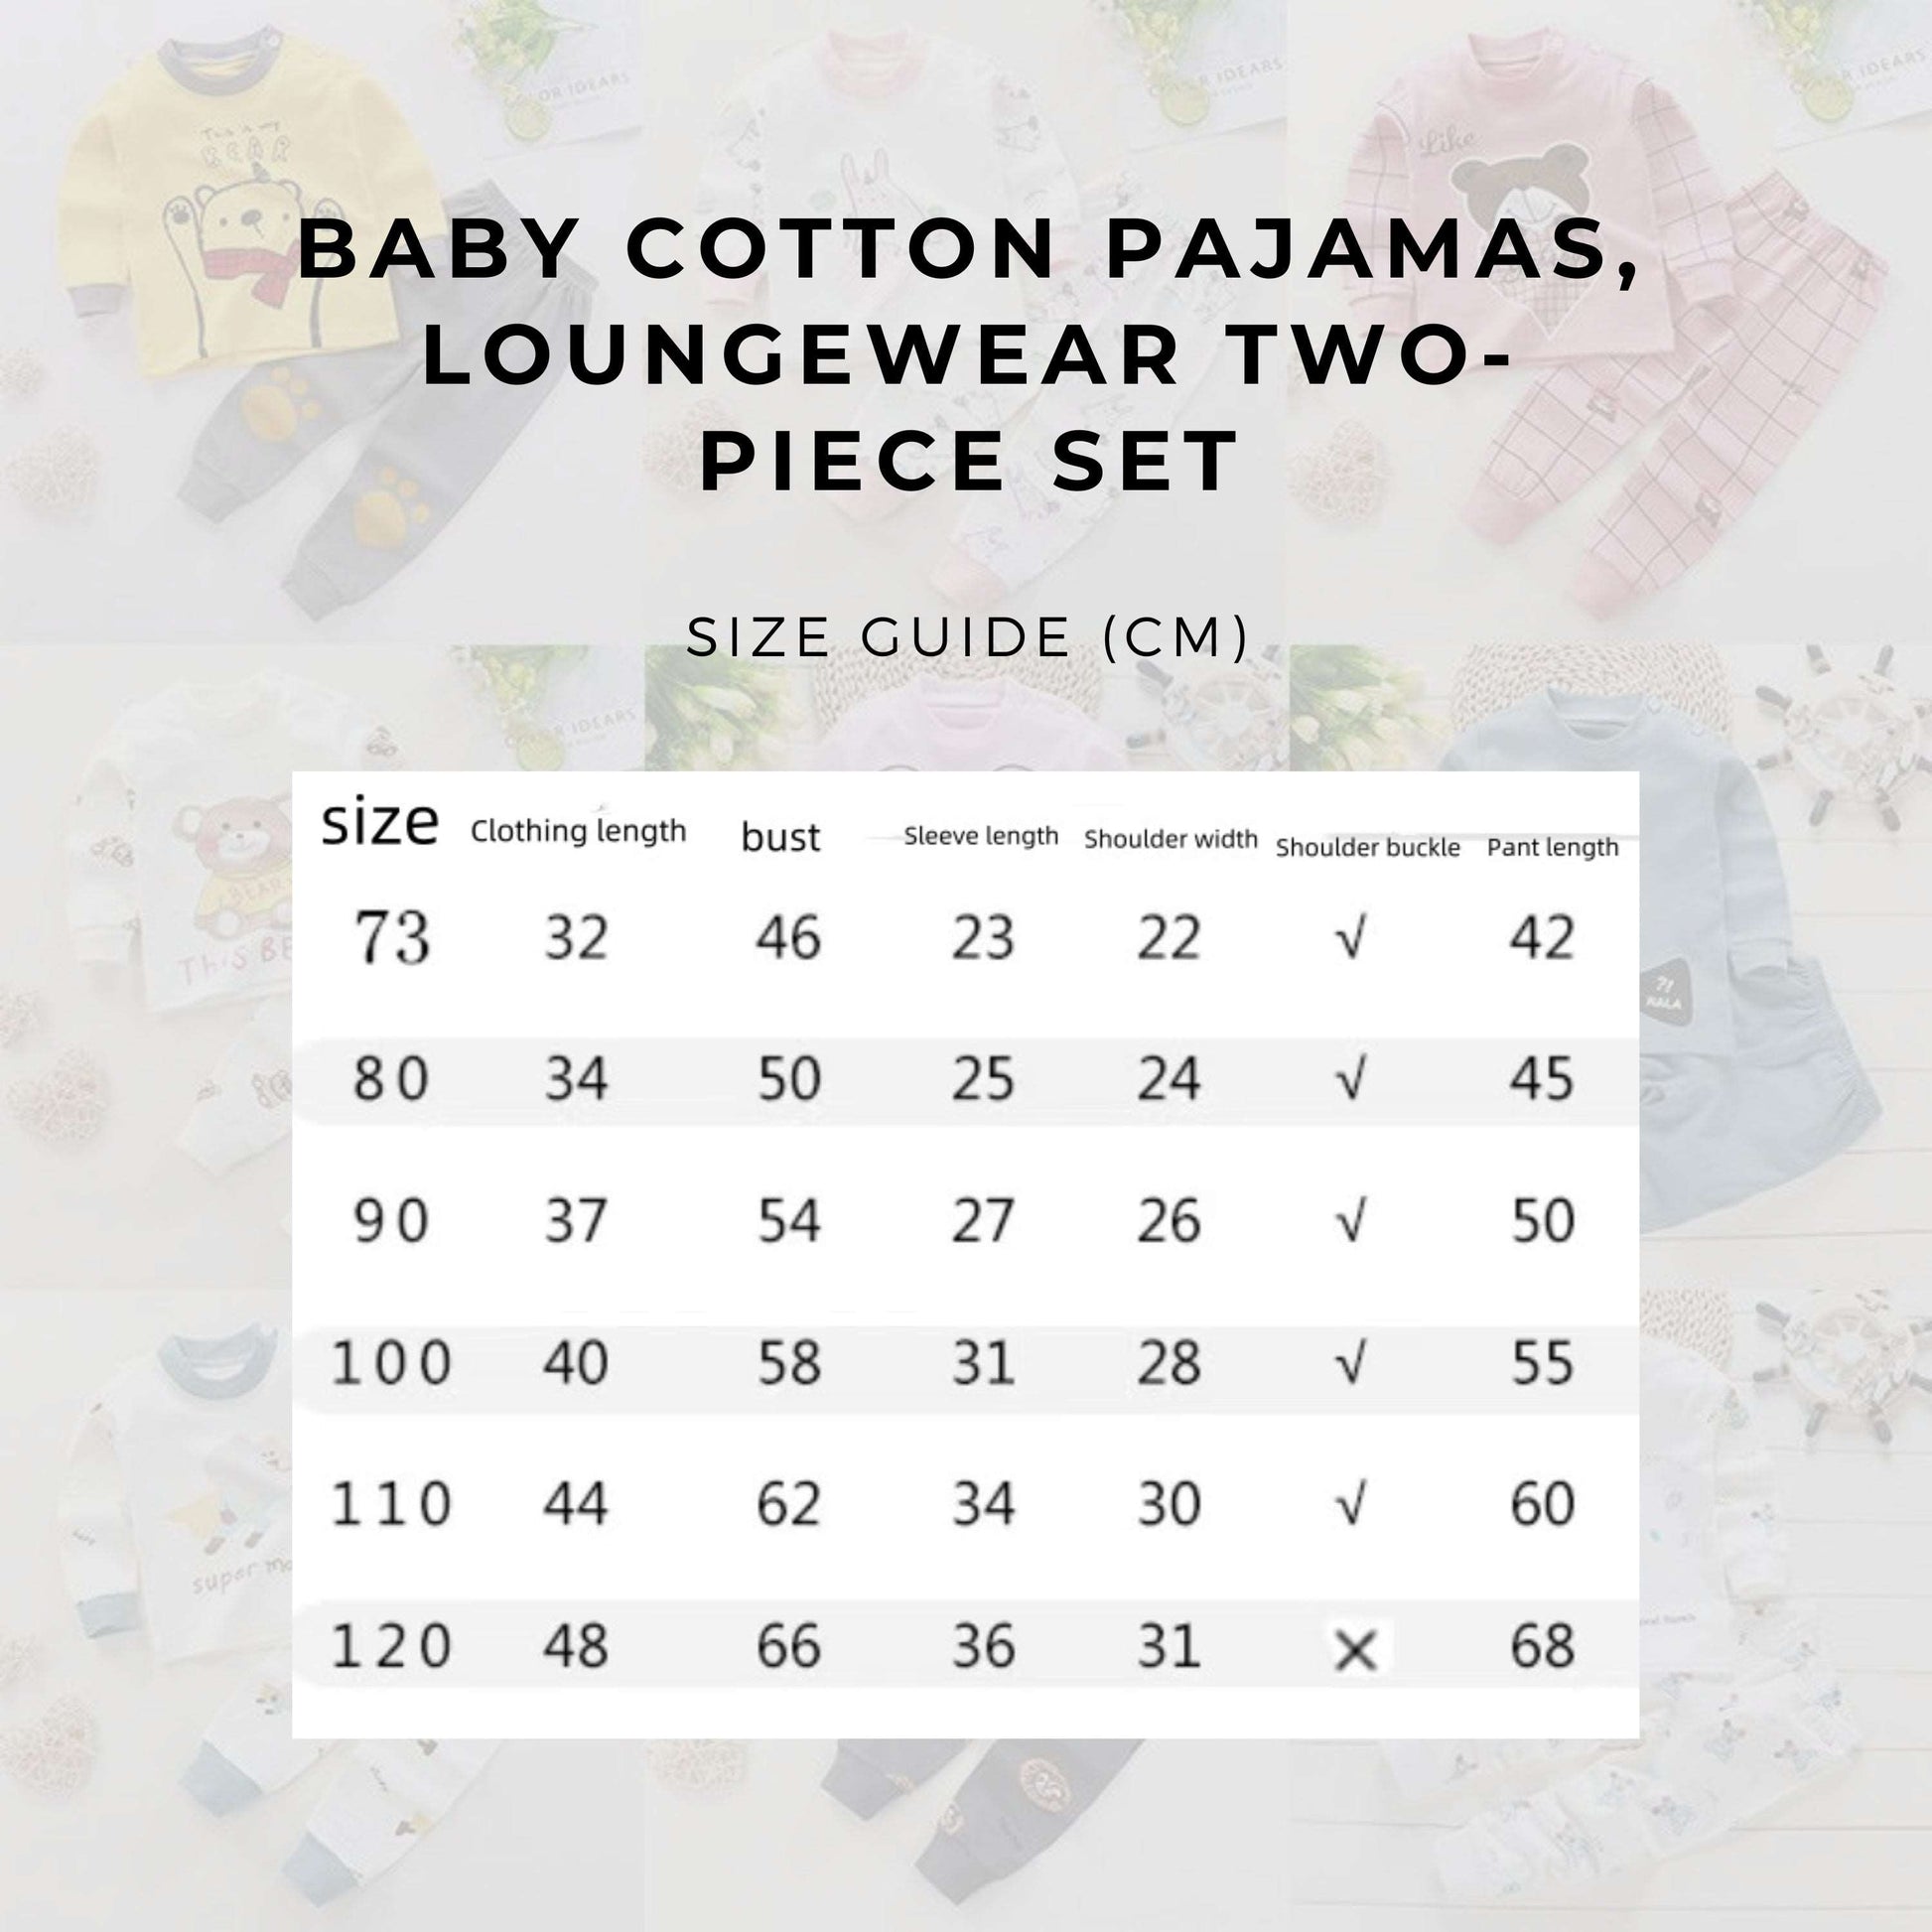 Baby Cotton Pajamas, Loungewear Two-piece Set size